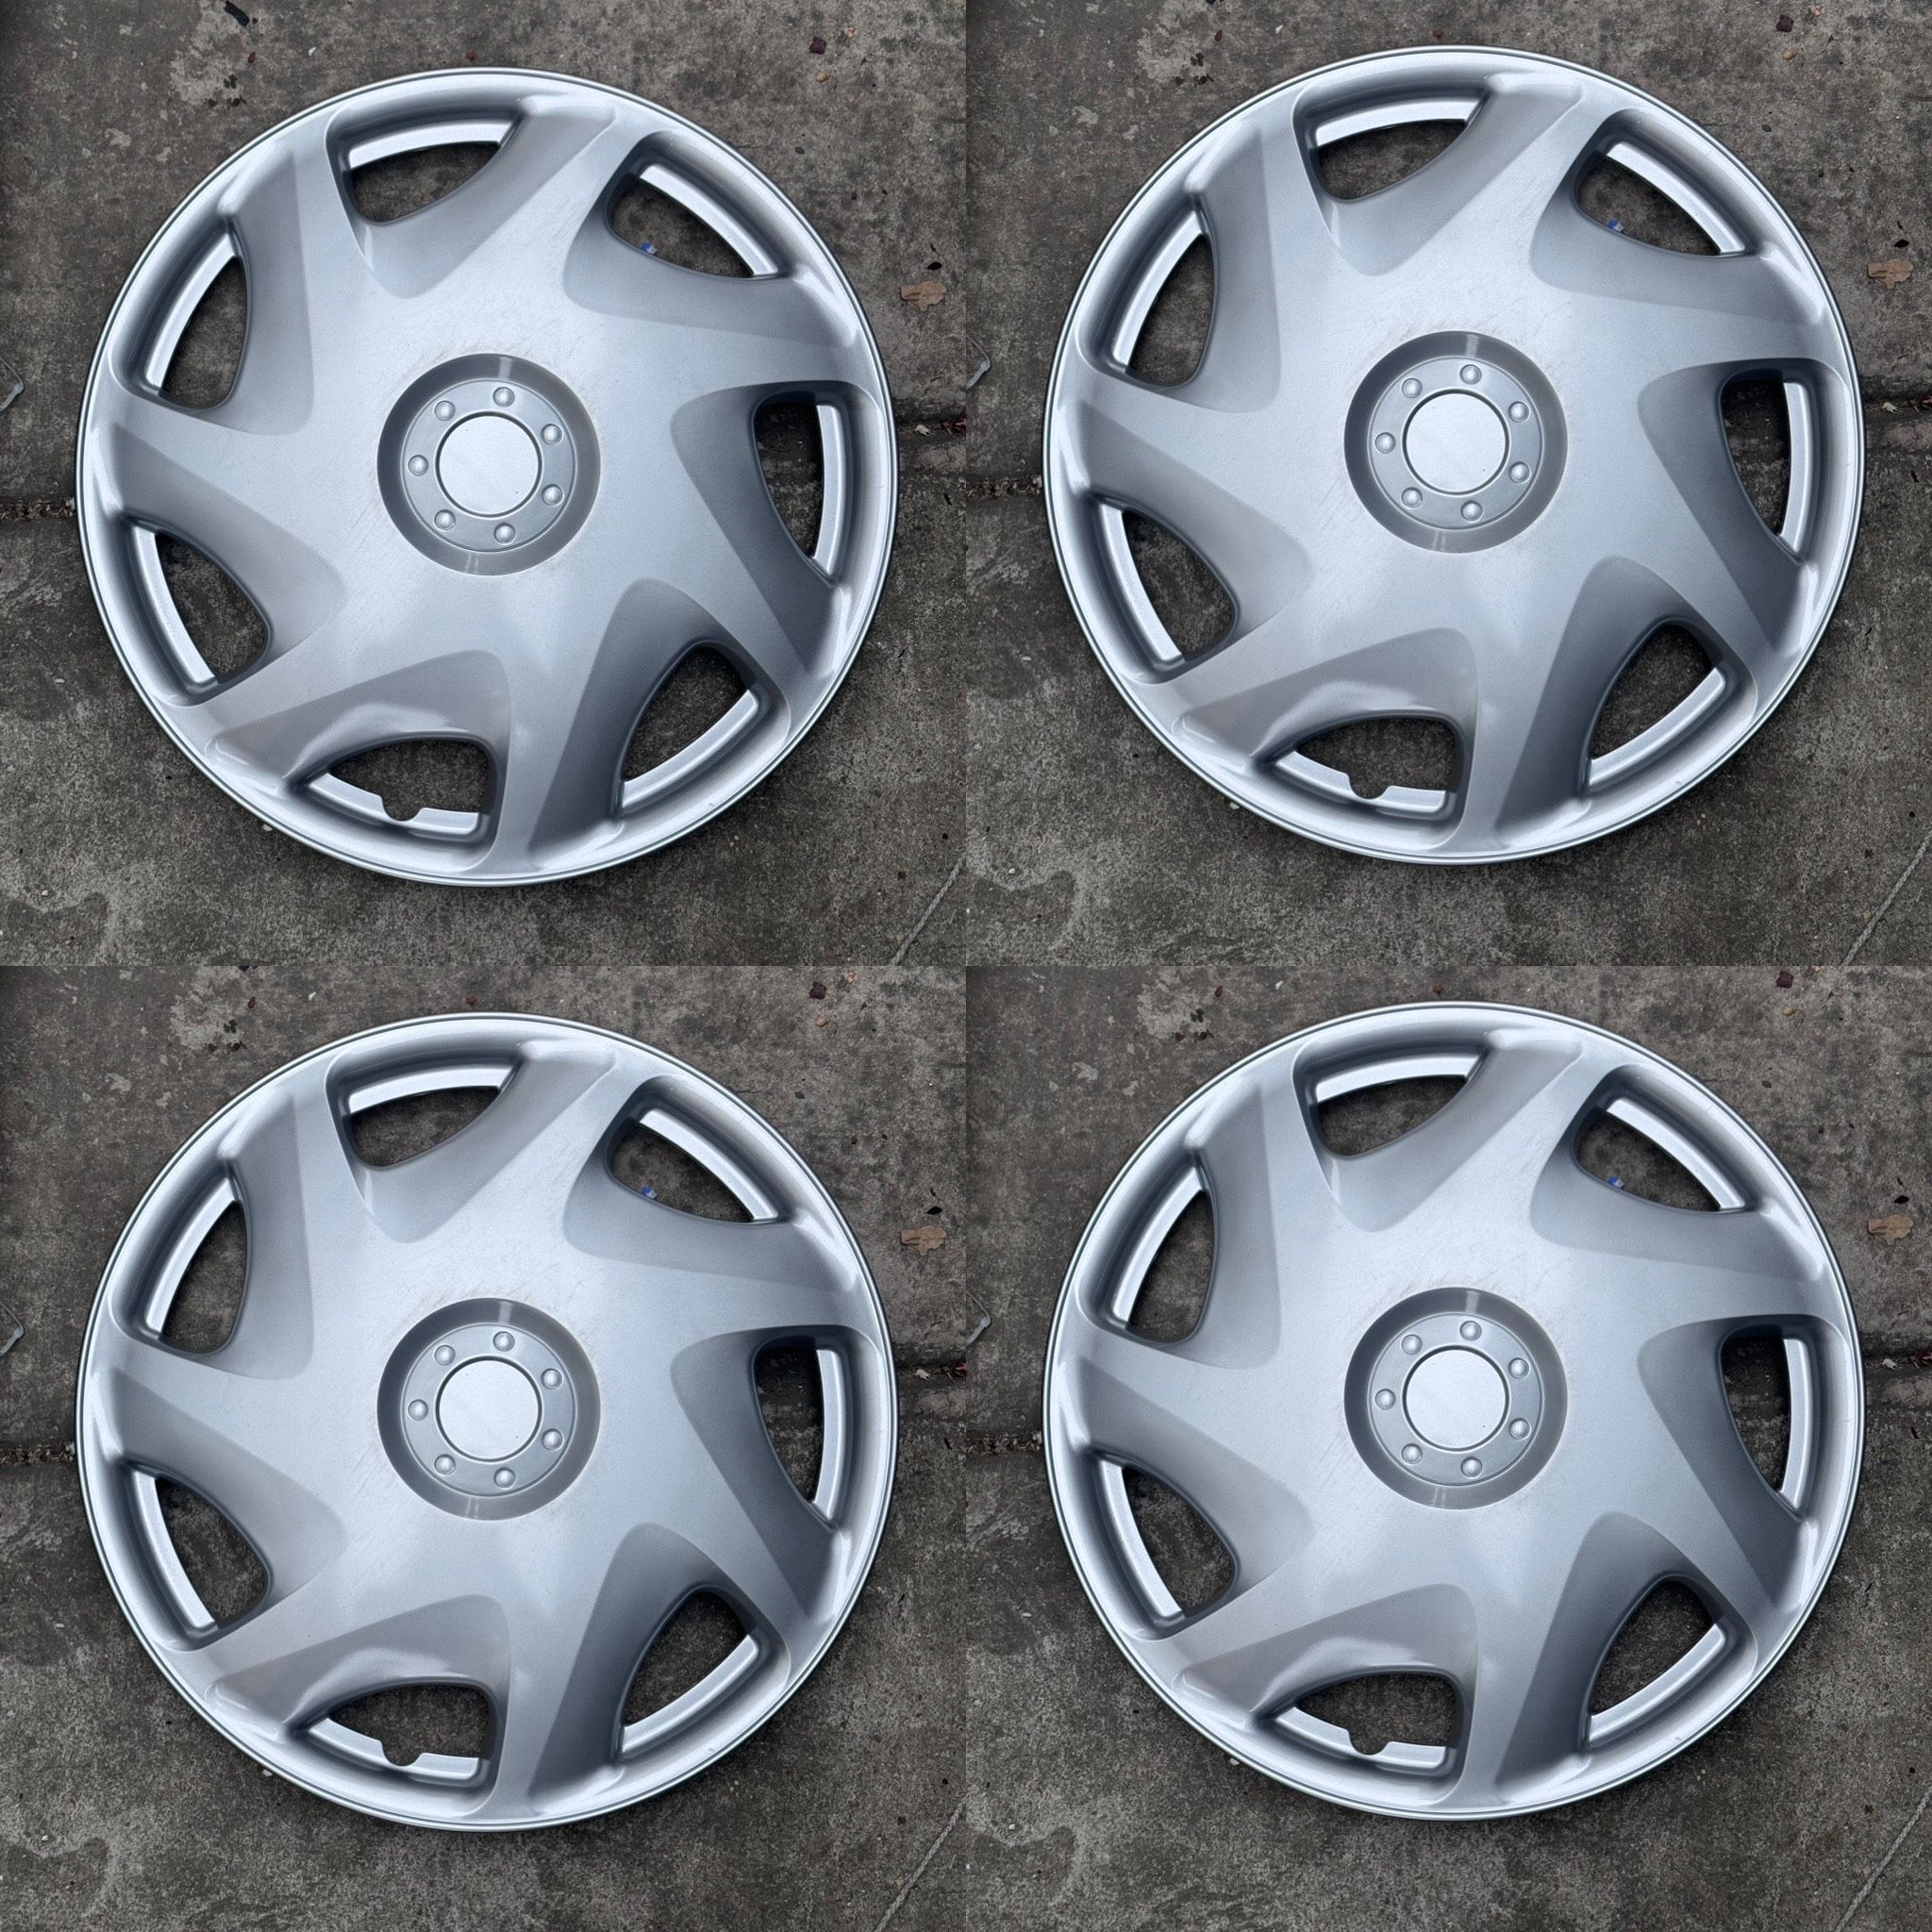 16” rim covers hubcaps universal fit set of 4pcs brand new firm price tapas de rin polveras 